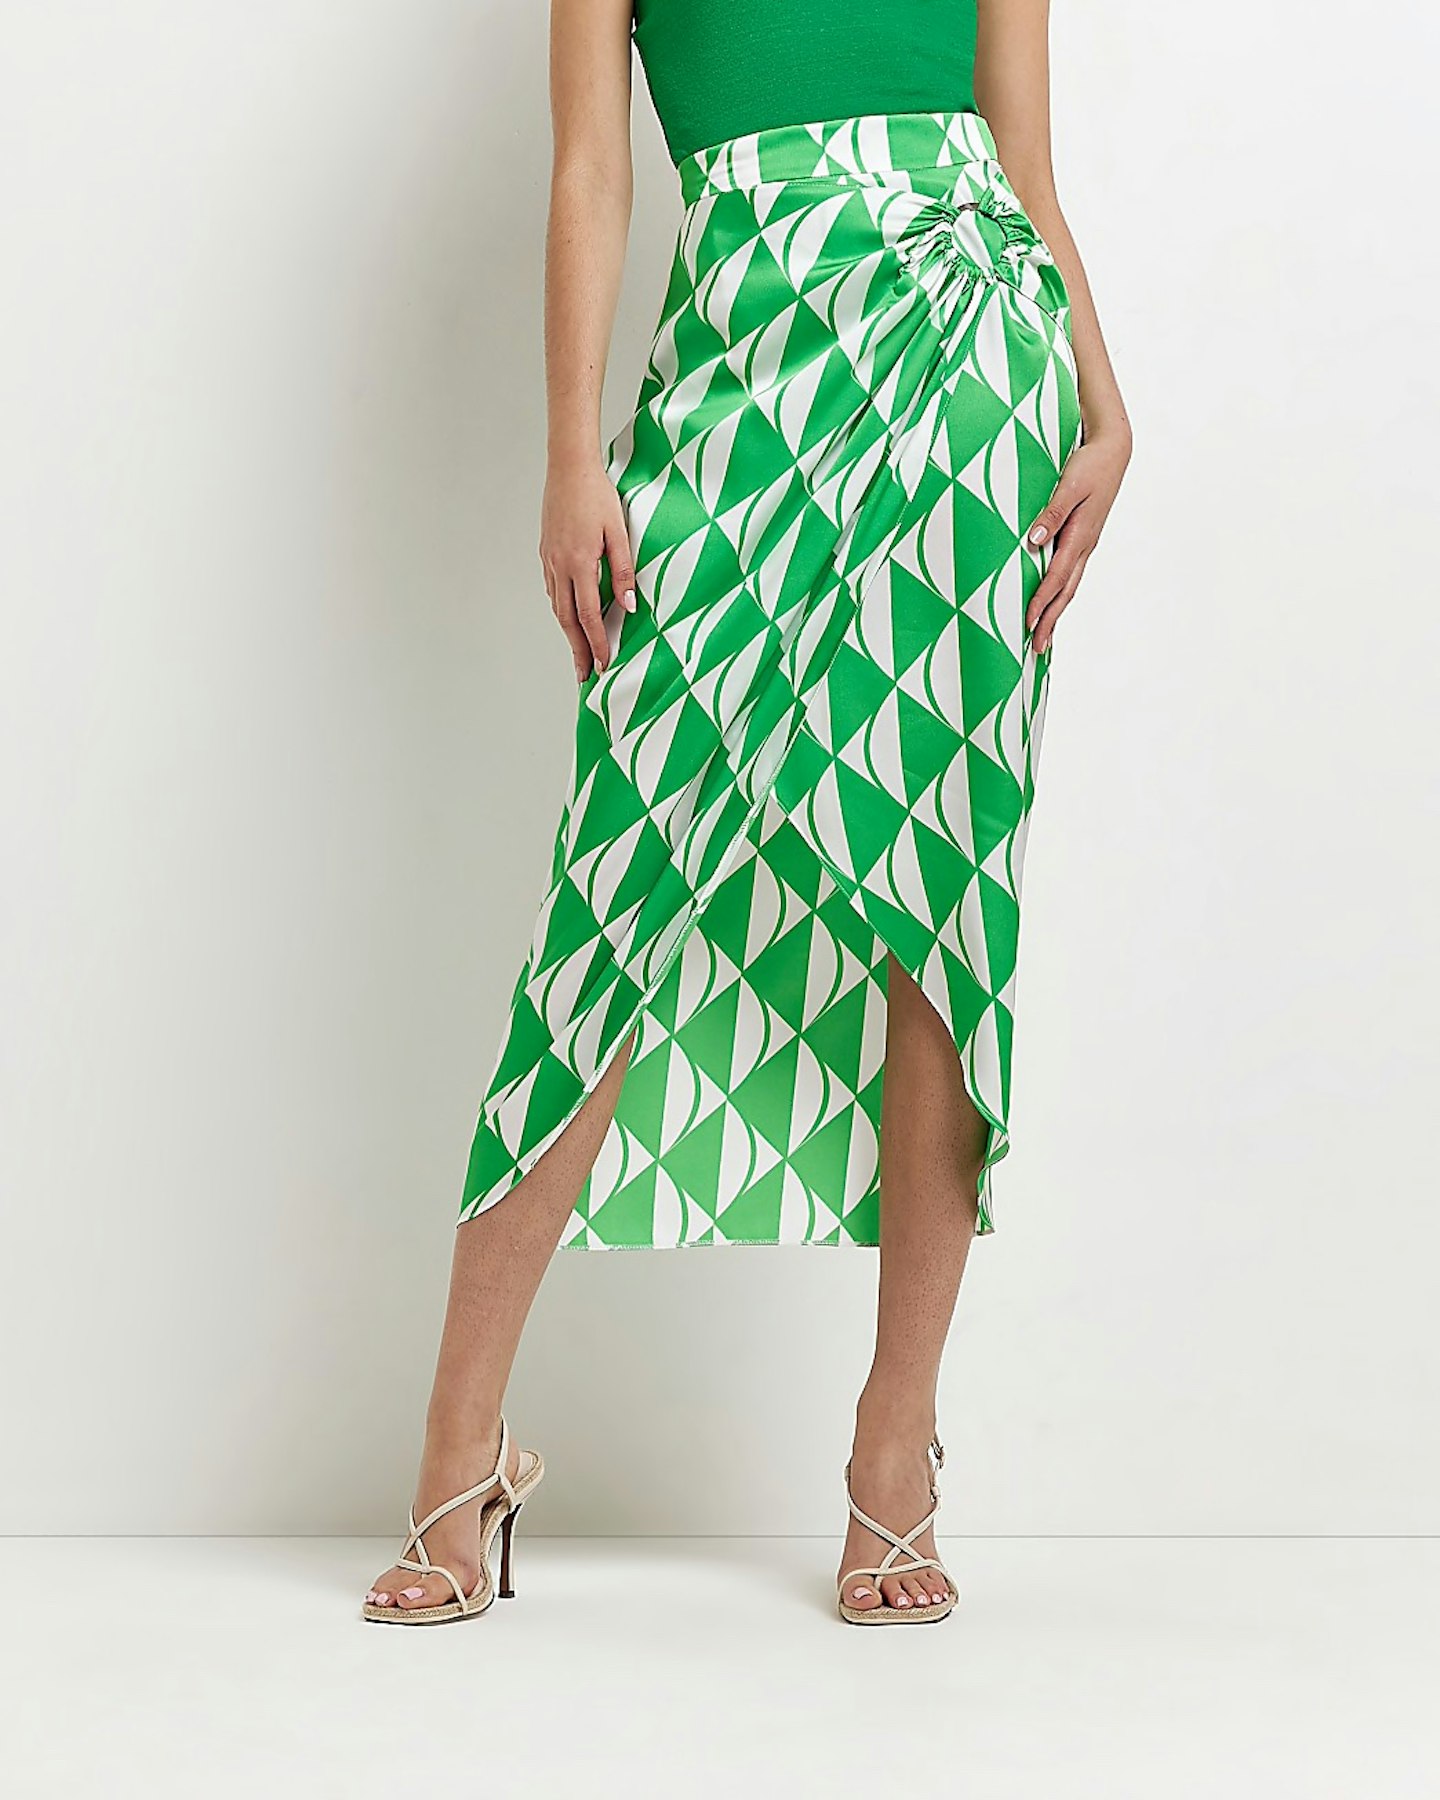 river island best buys Green Geometric Print Satin Wrap Skirt, £37